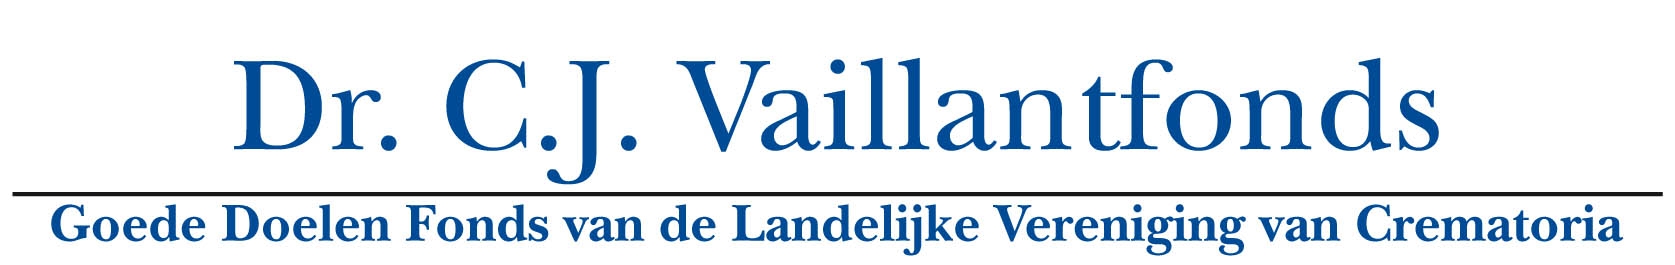 Logo Dr Vaillantfonds